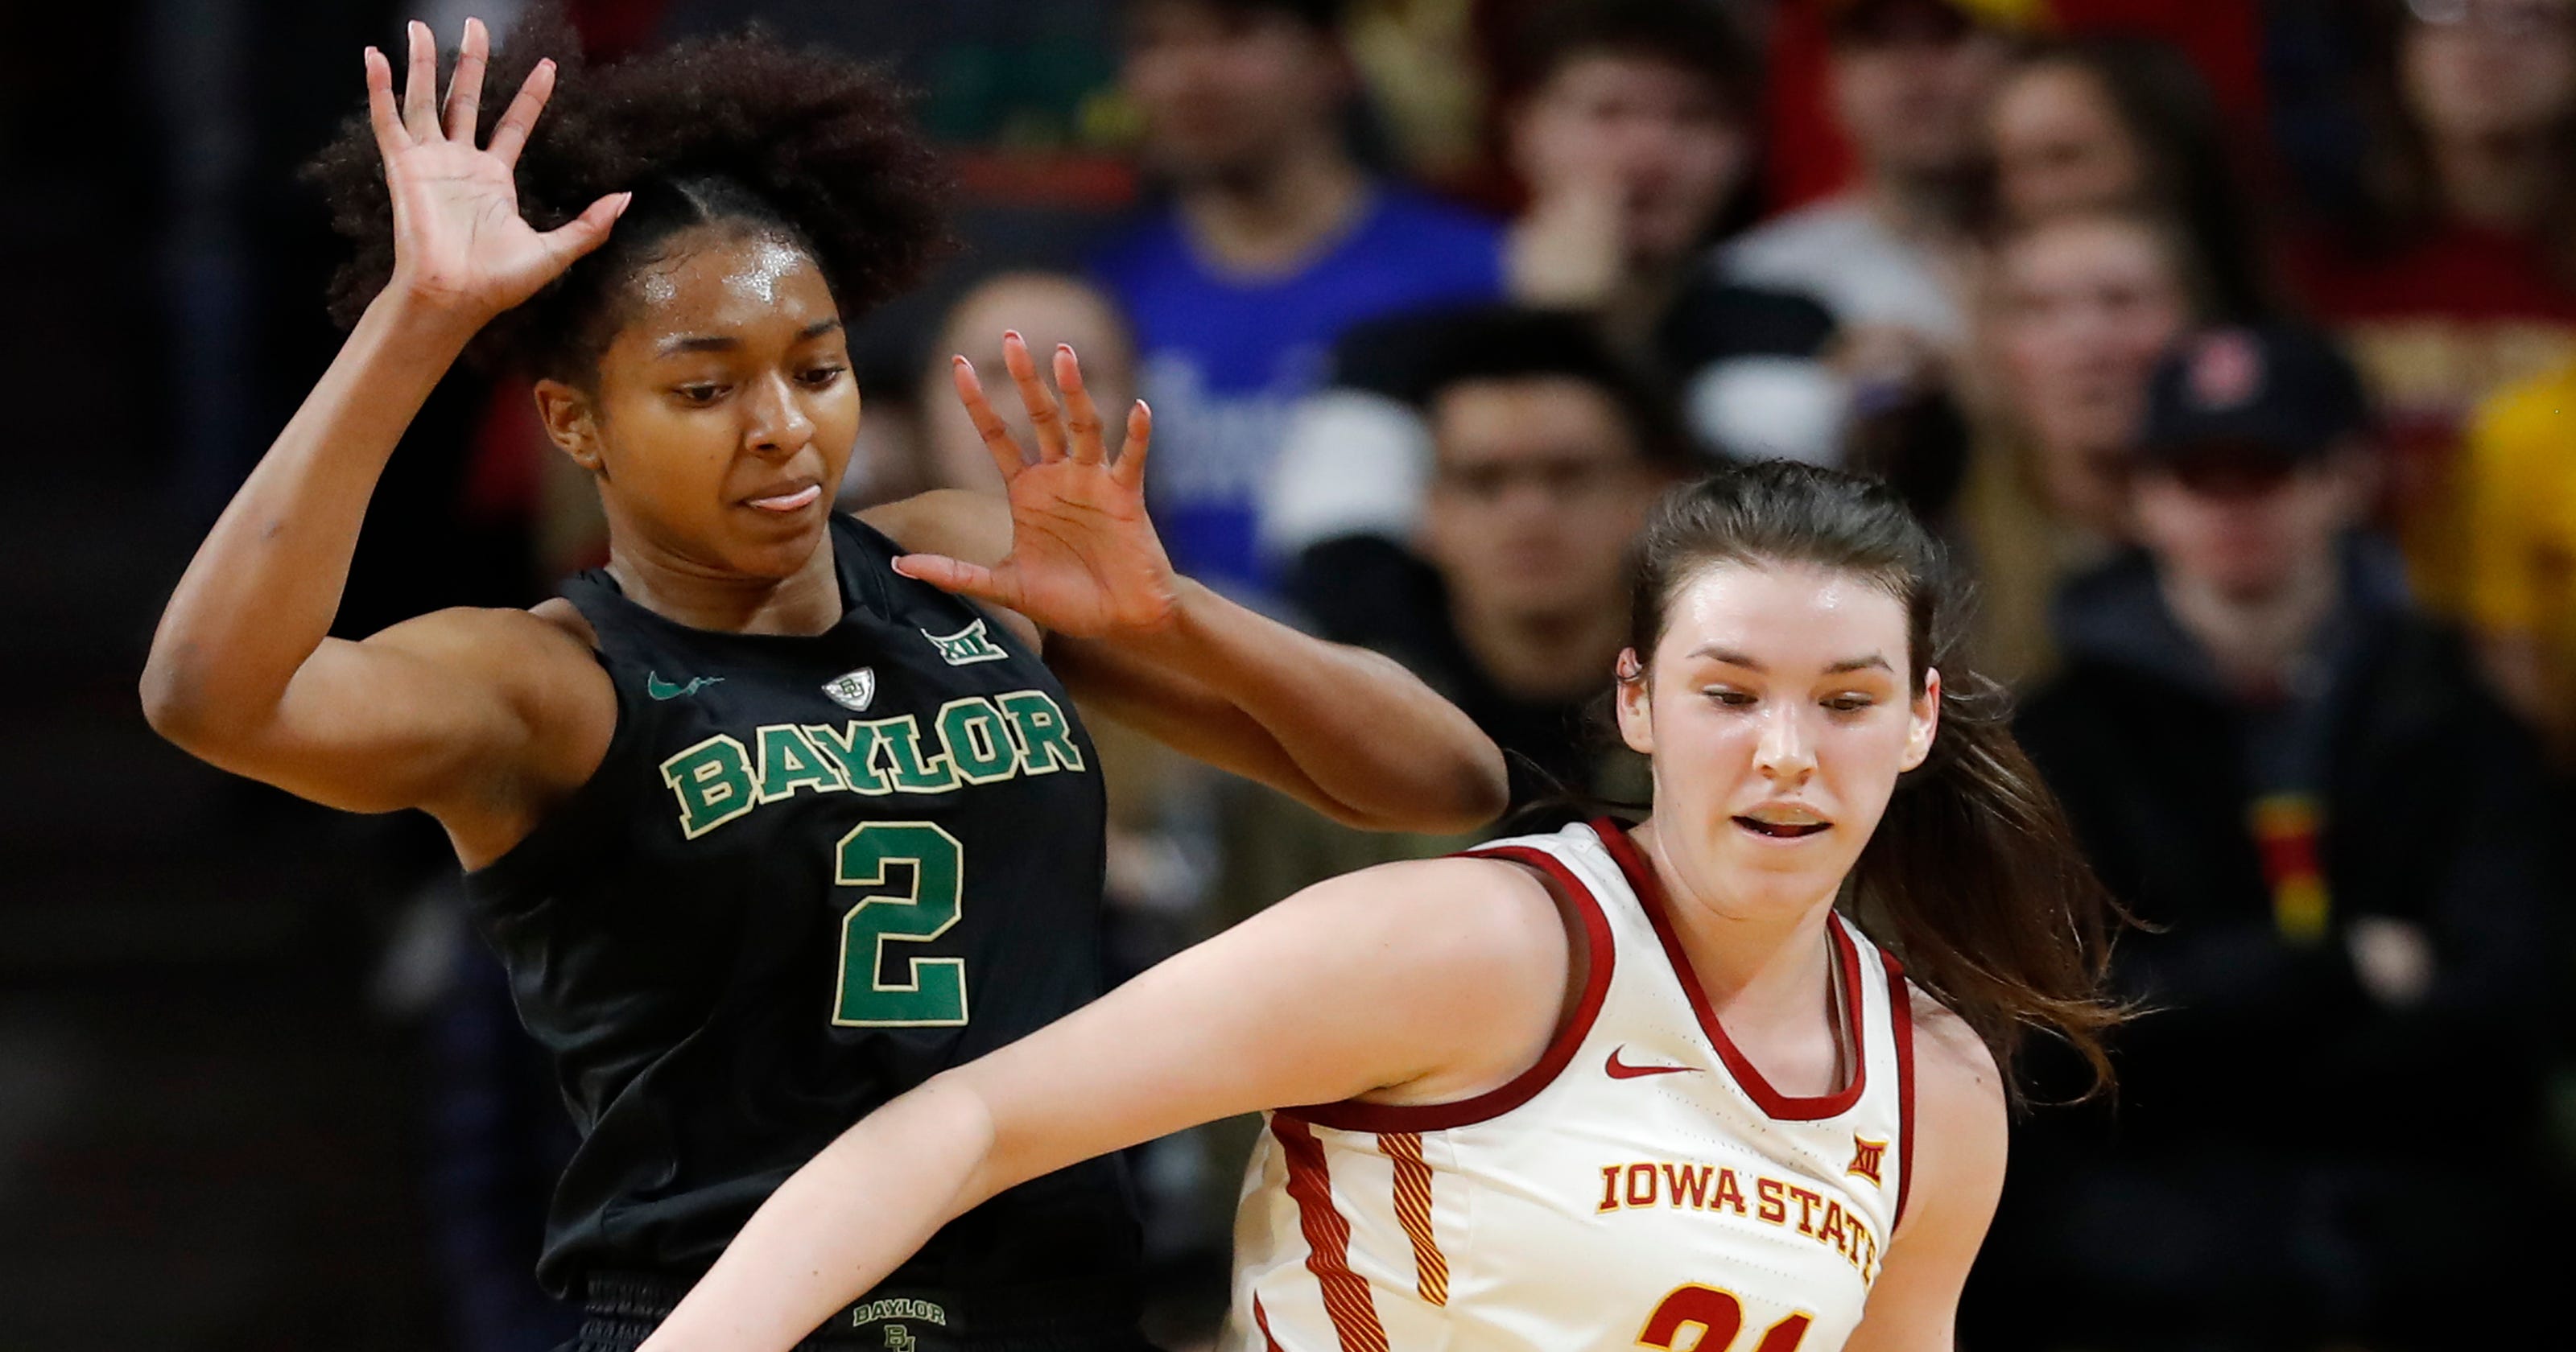 Women's Basketball: Top-ranked Baylor defeats Iowa State women at Hilton Coliseum